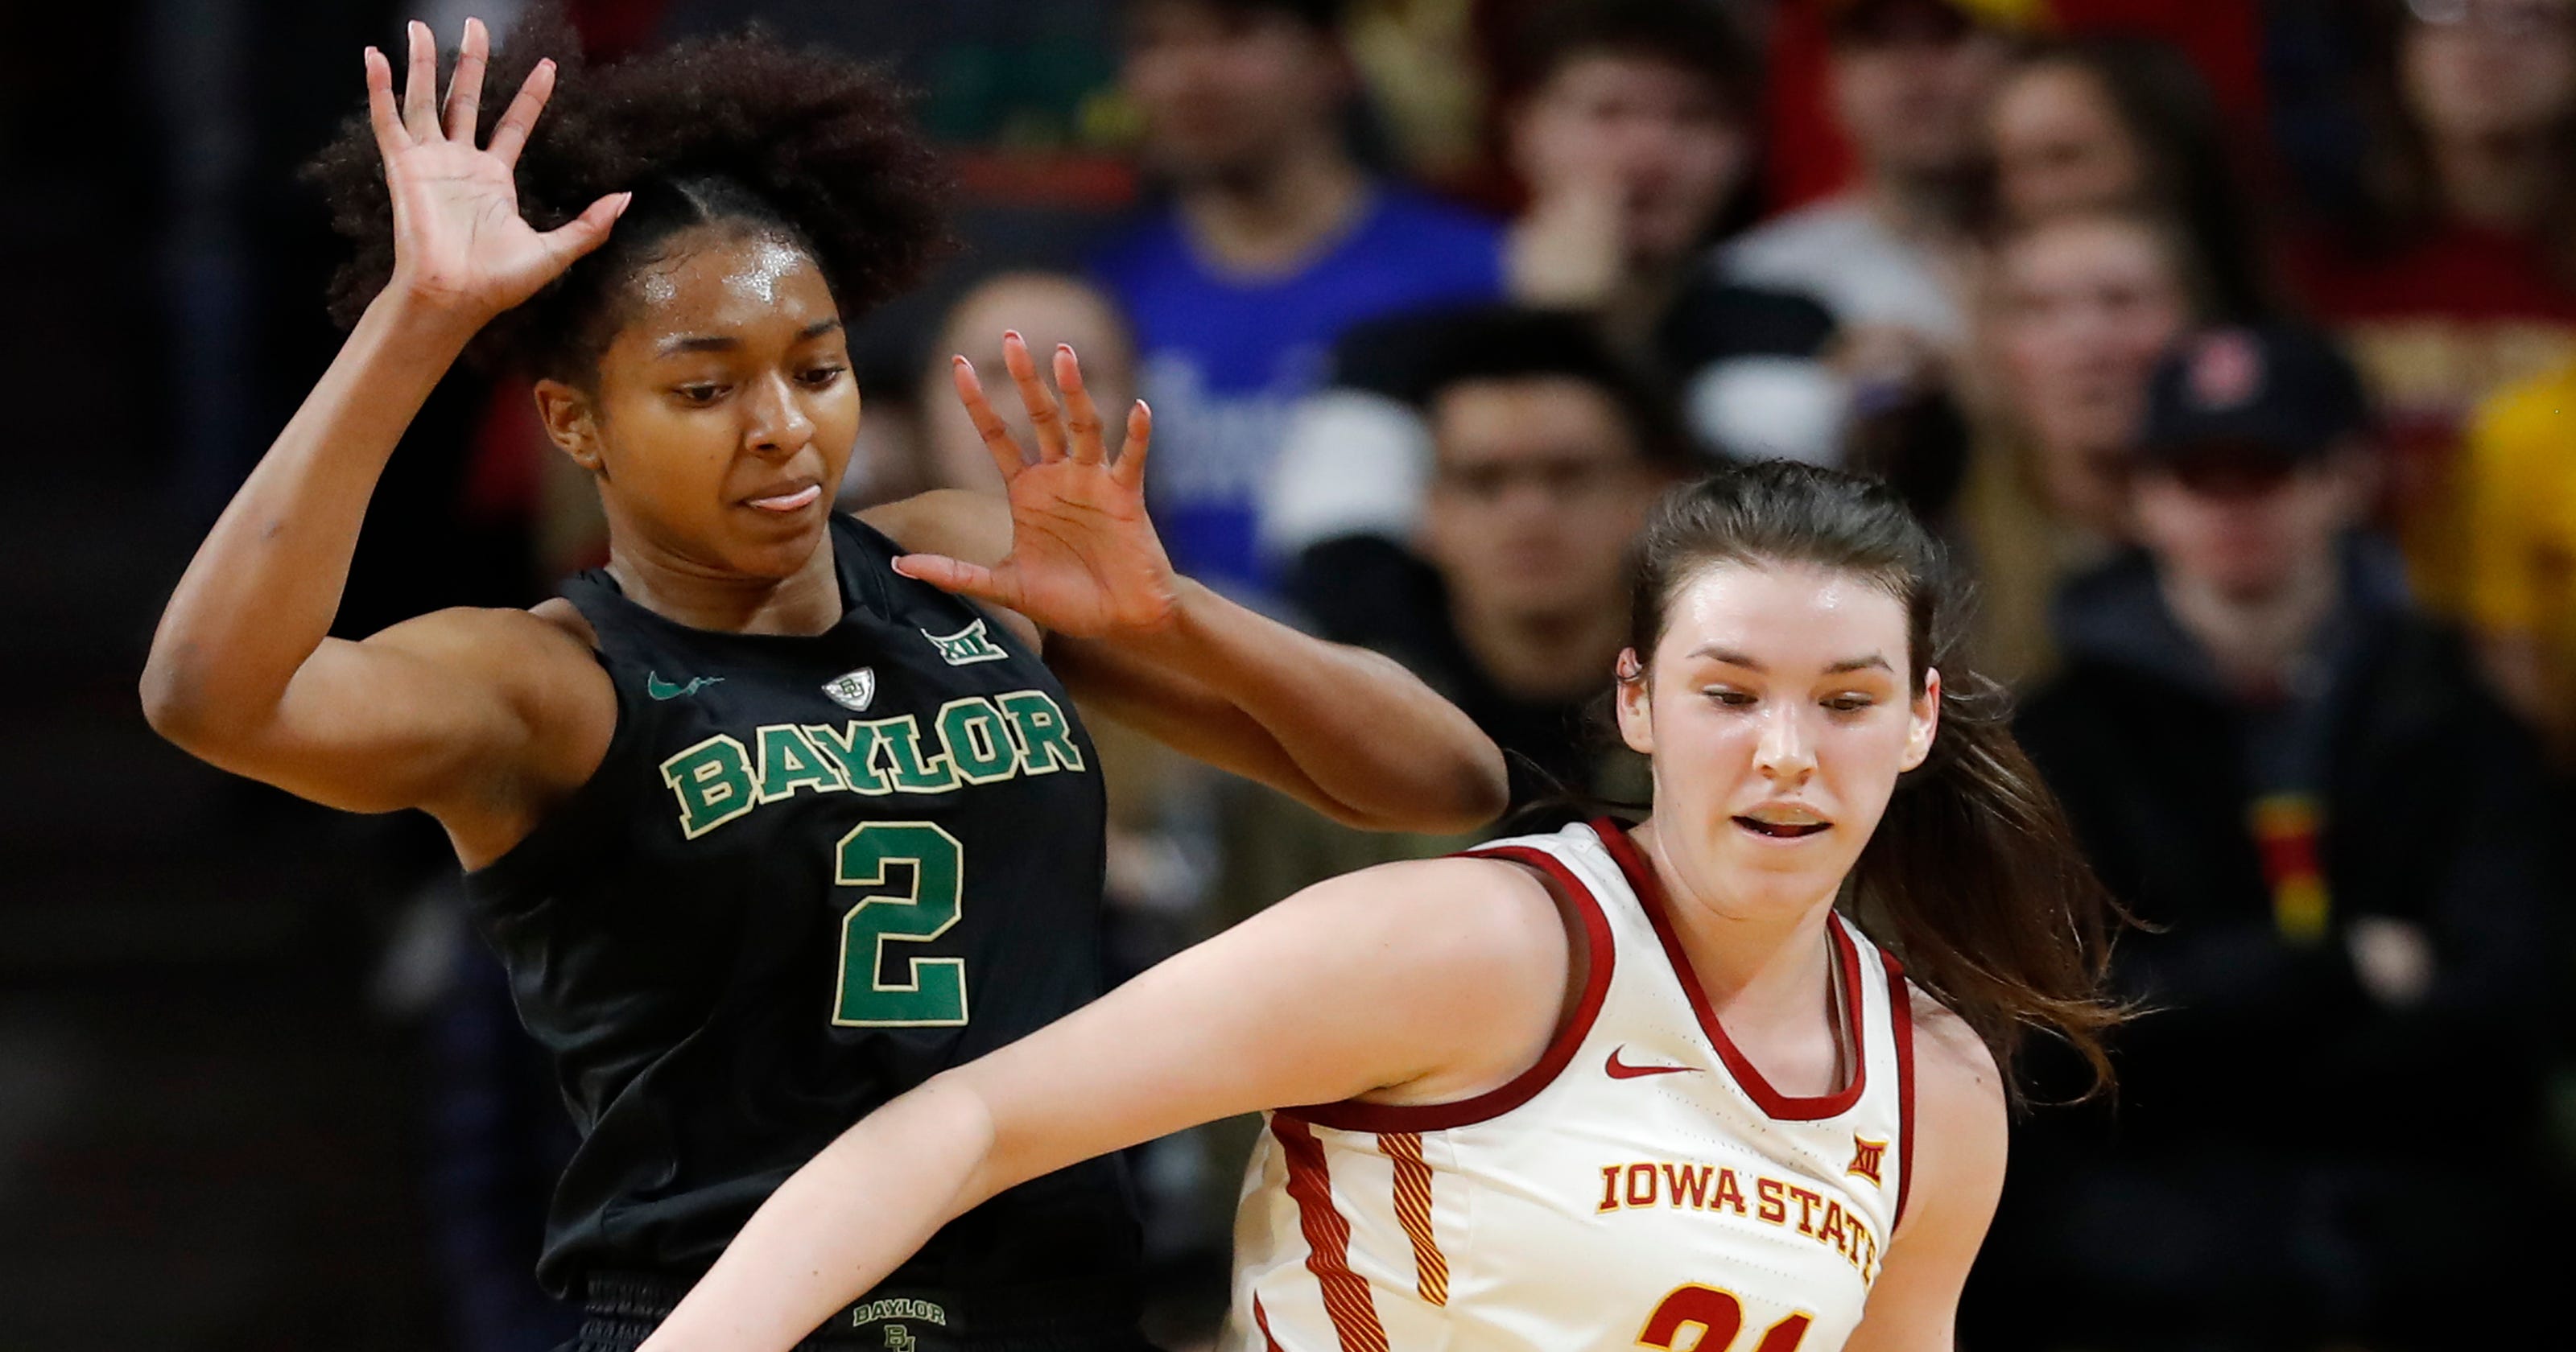 Women's Basketball: Top-ranked Baylor defeats Iowa State women at Hilton Coliseum